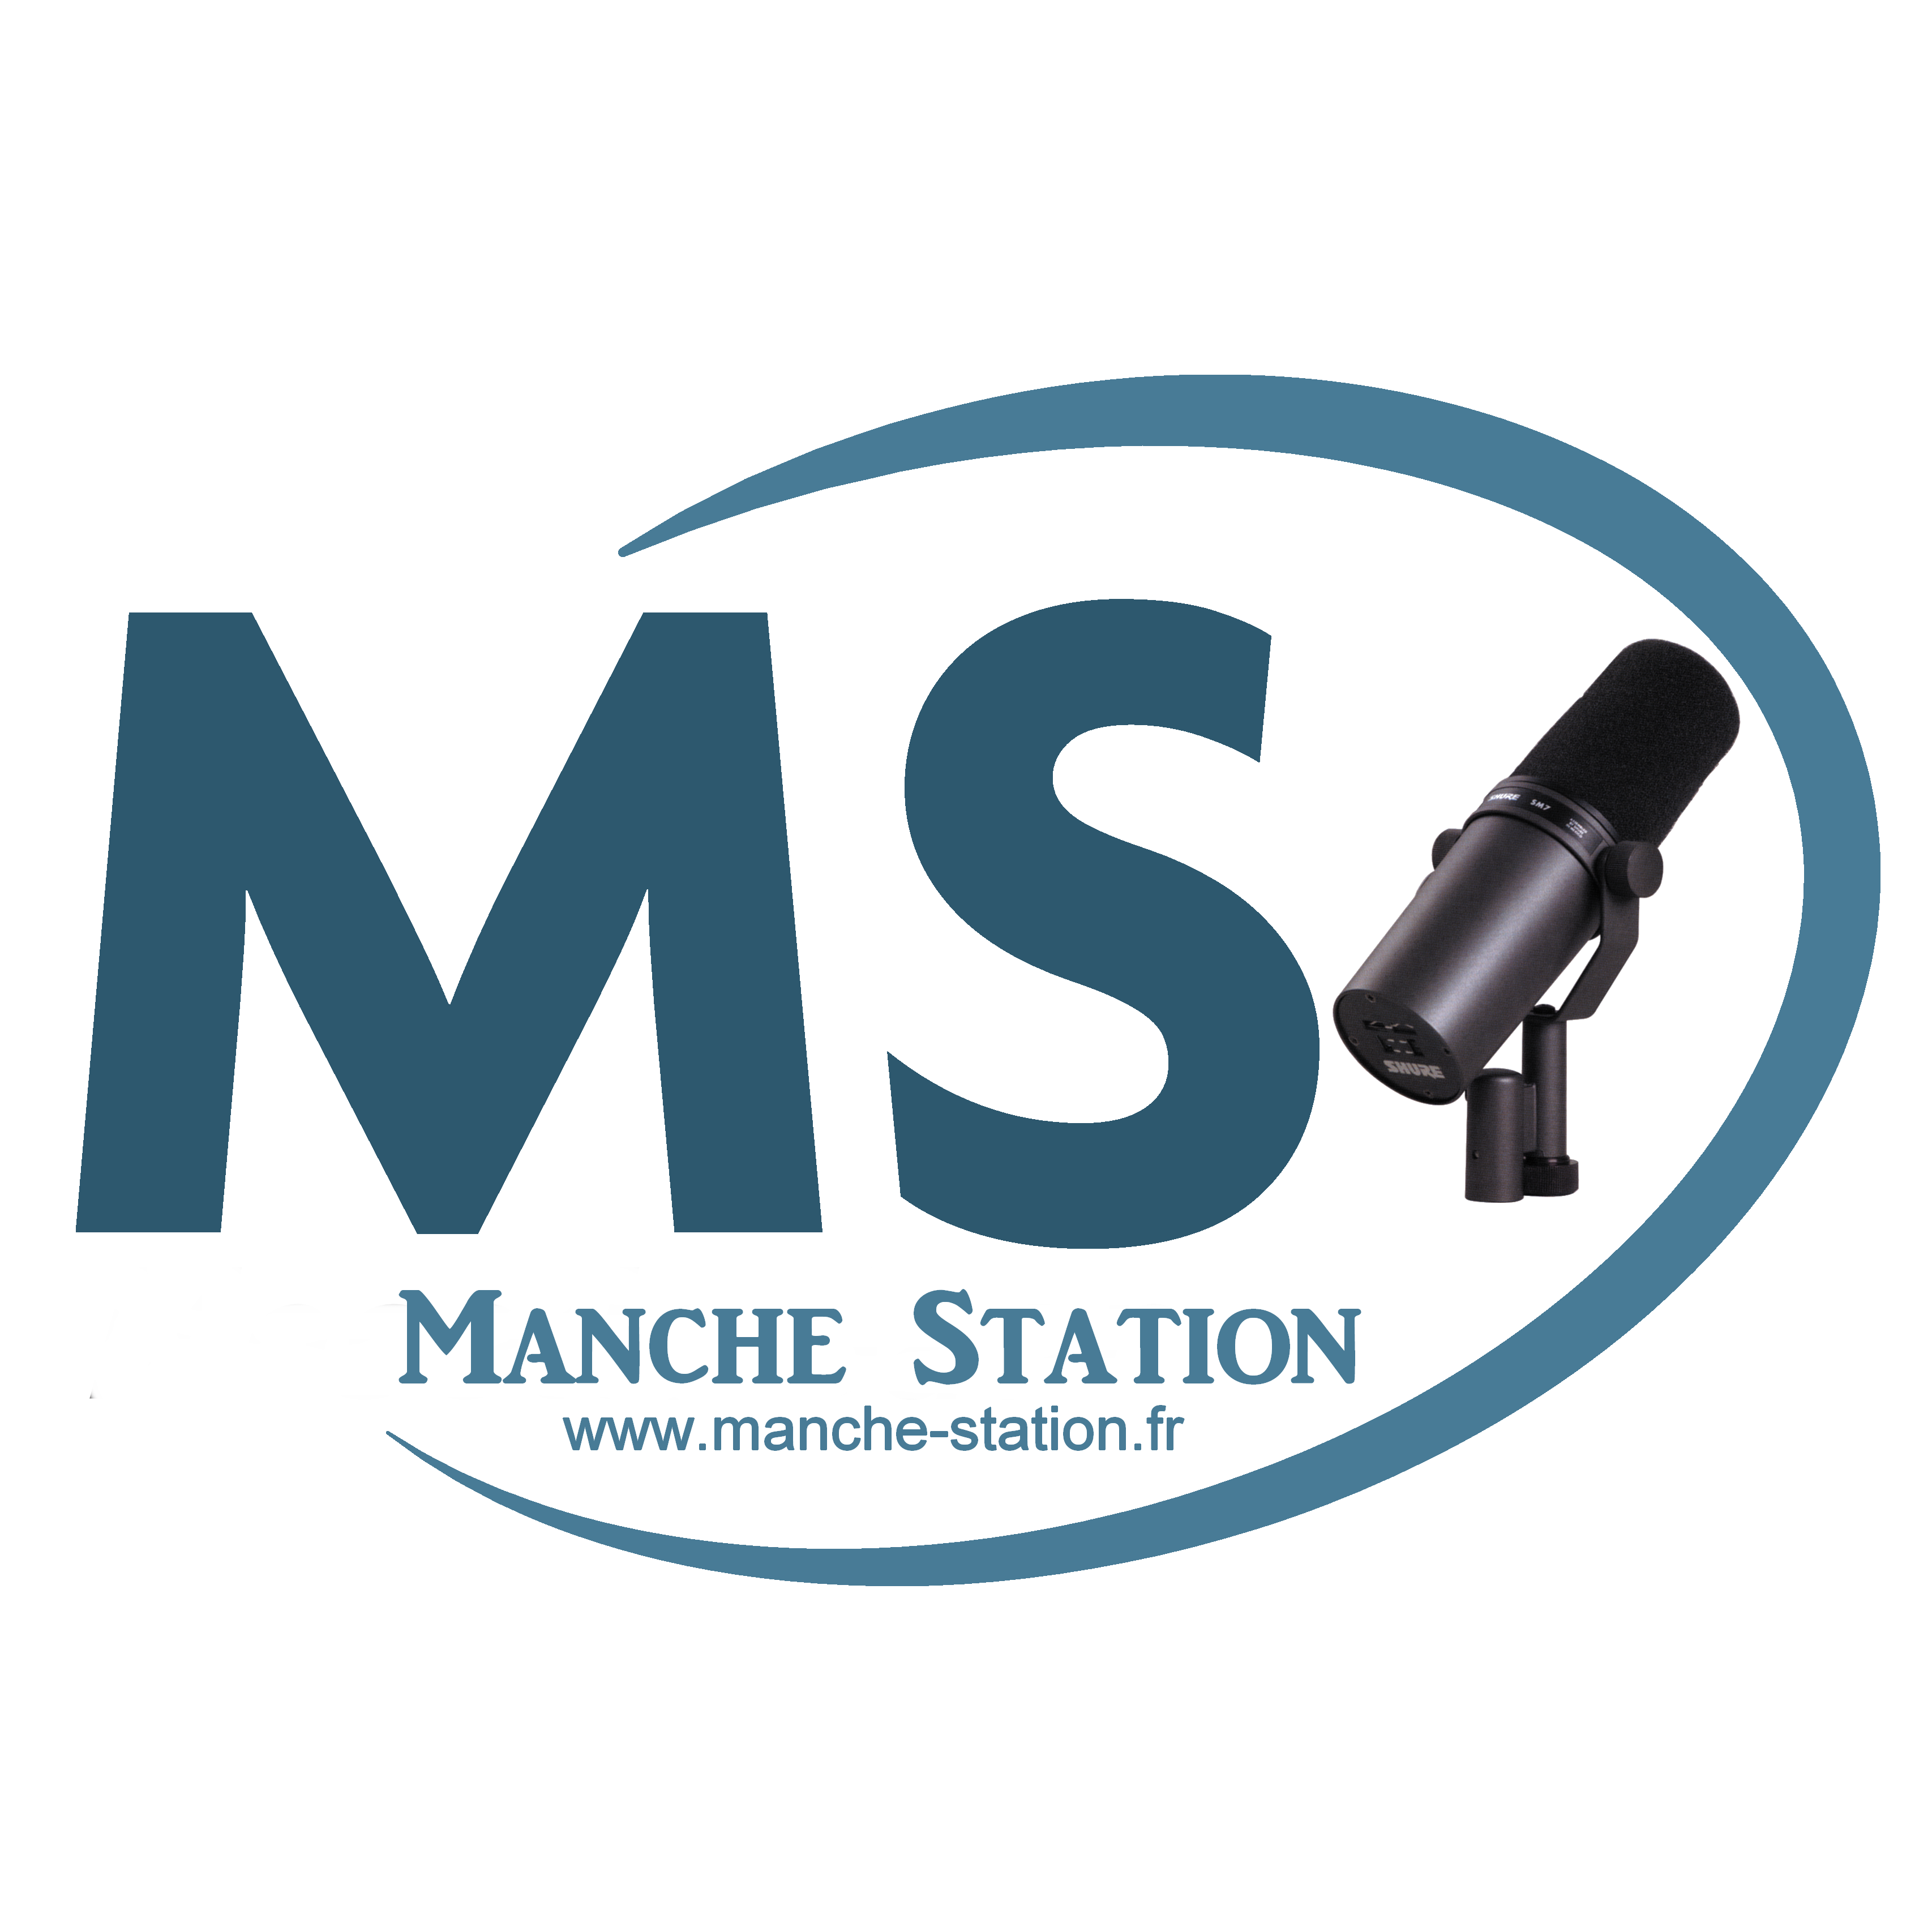 Manche-Station